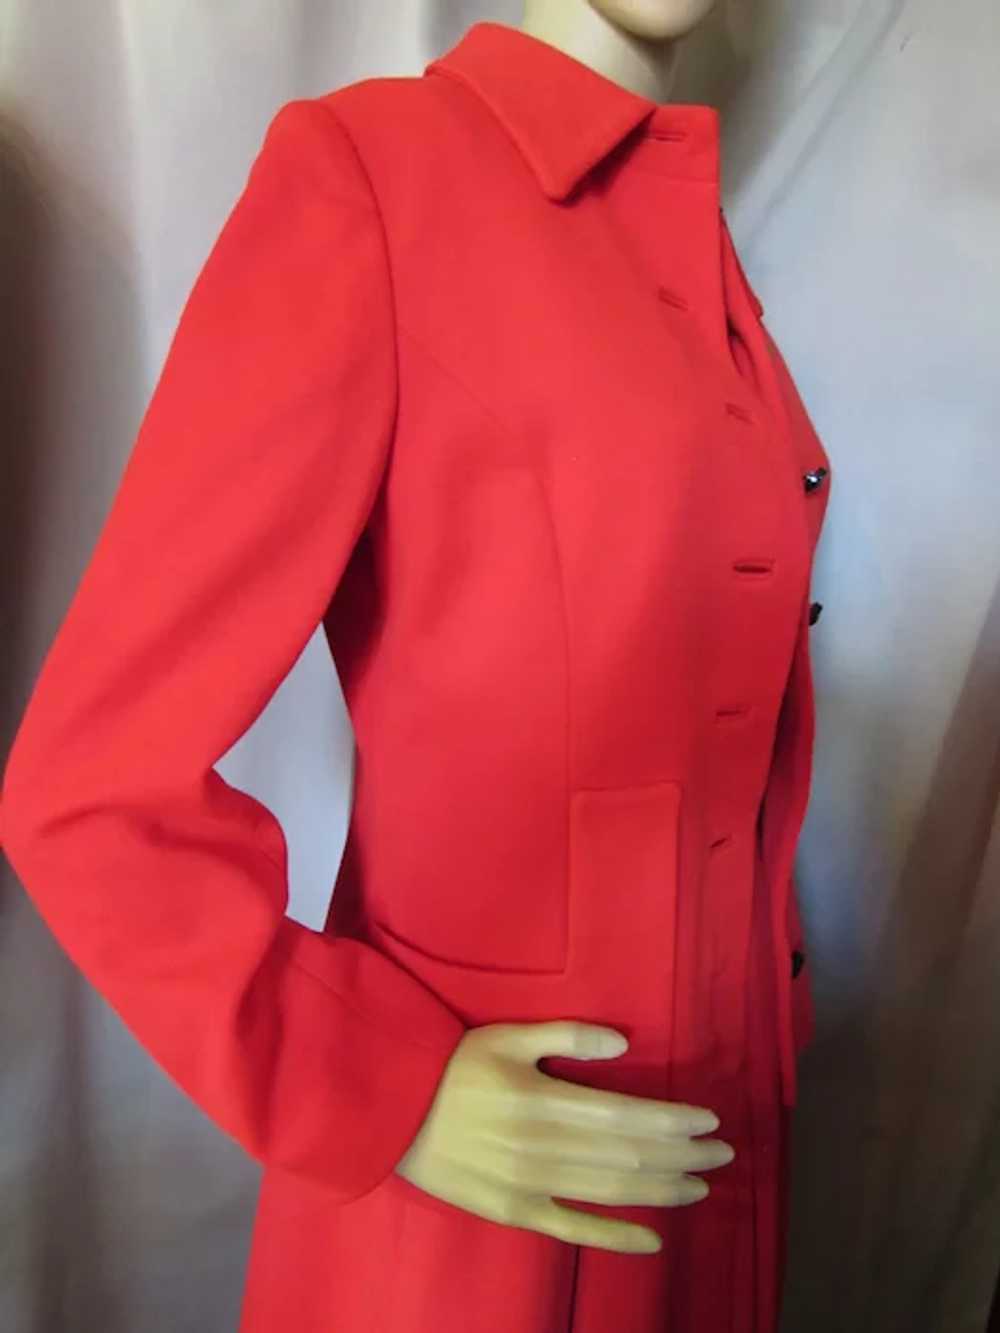 Cherry Red Knit Jacket Dress Set 1970 Era - image 8